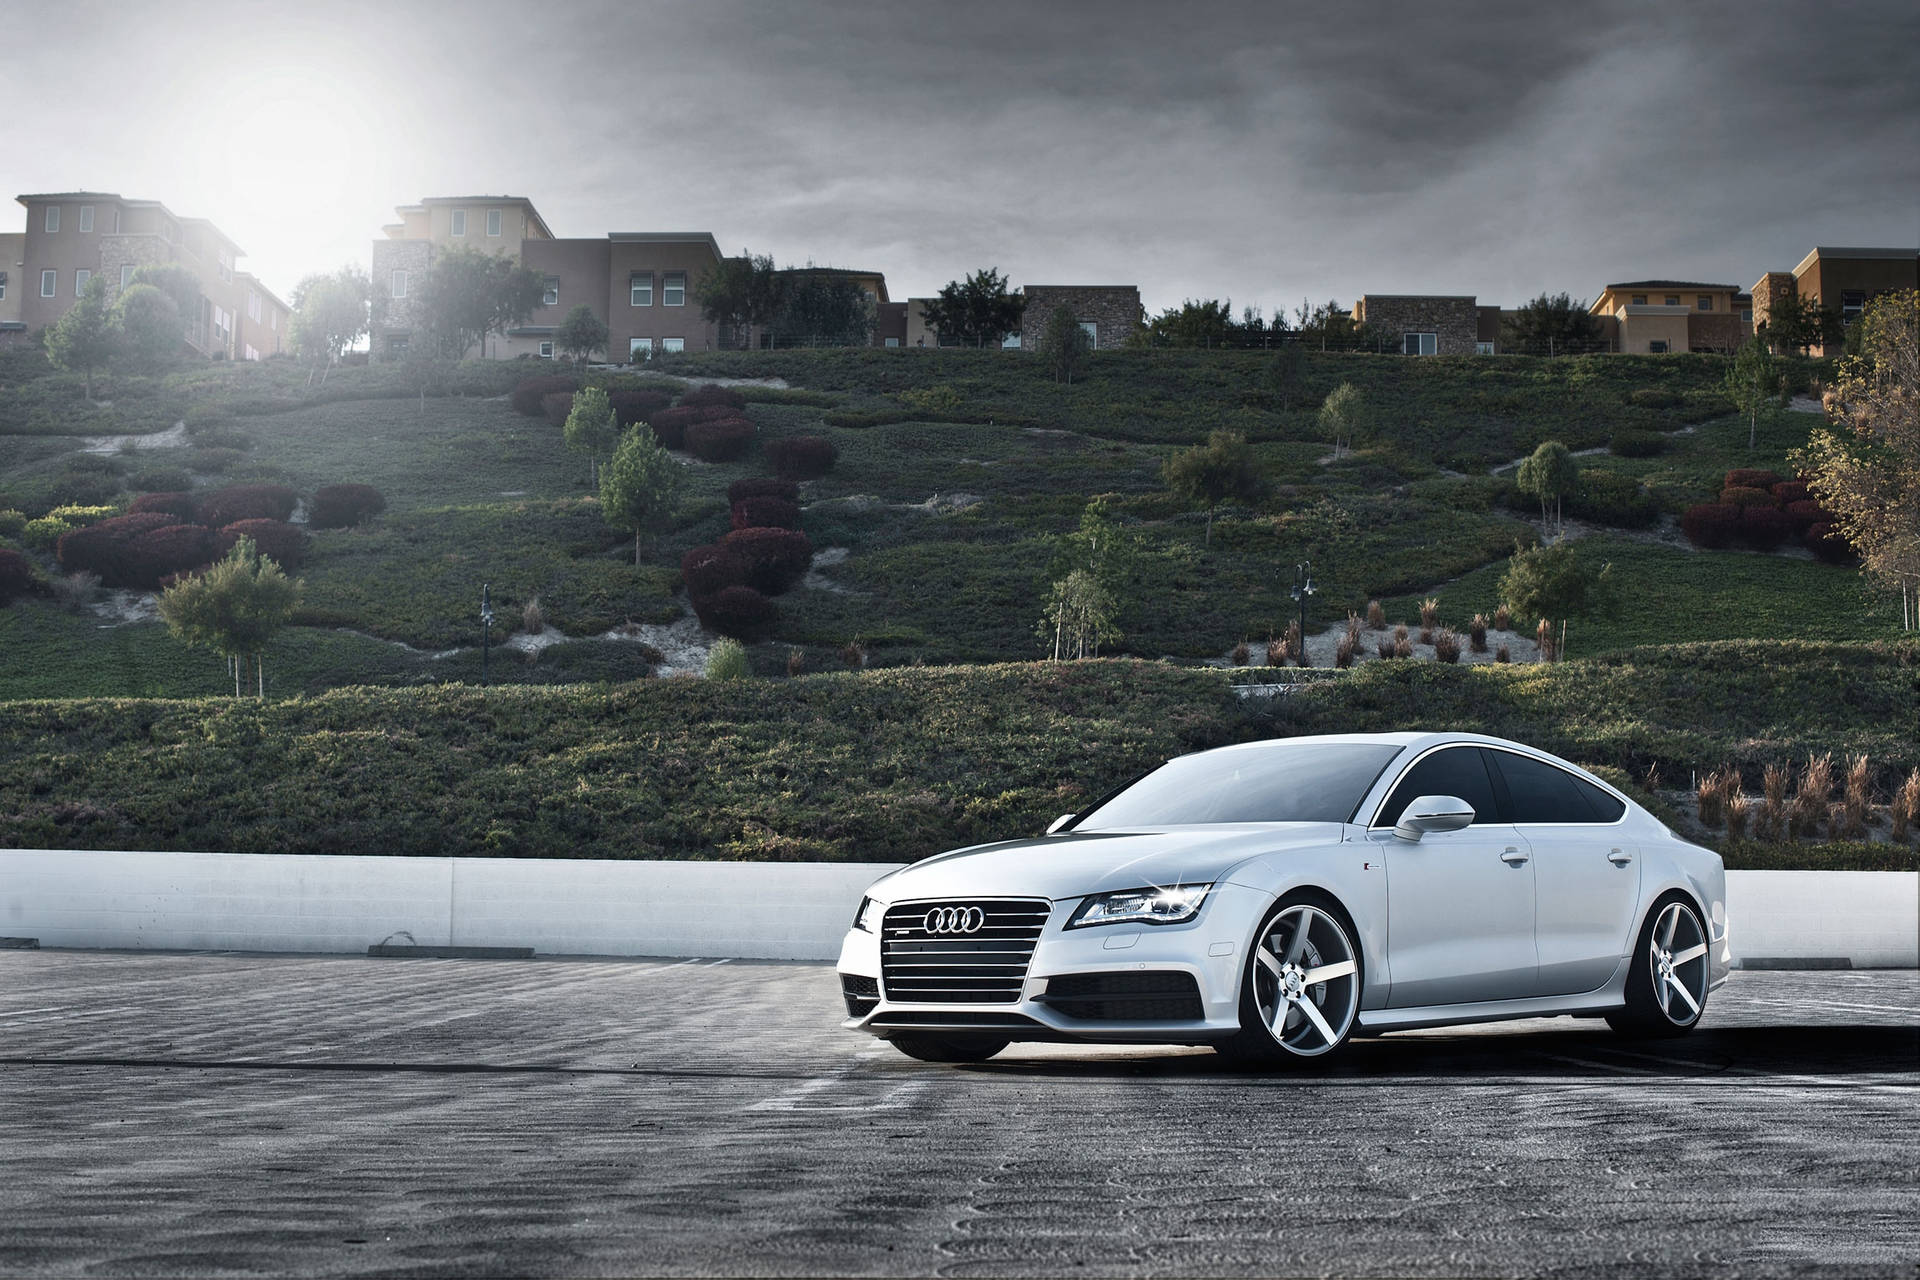 Top 999+ Audi Wallpaper Full HD, 4K✅Free to Use